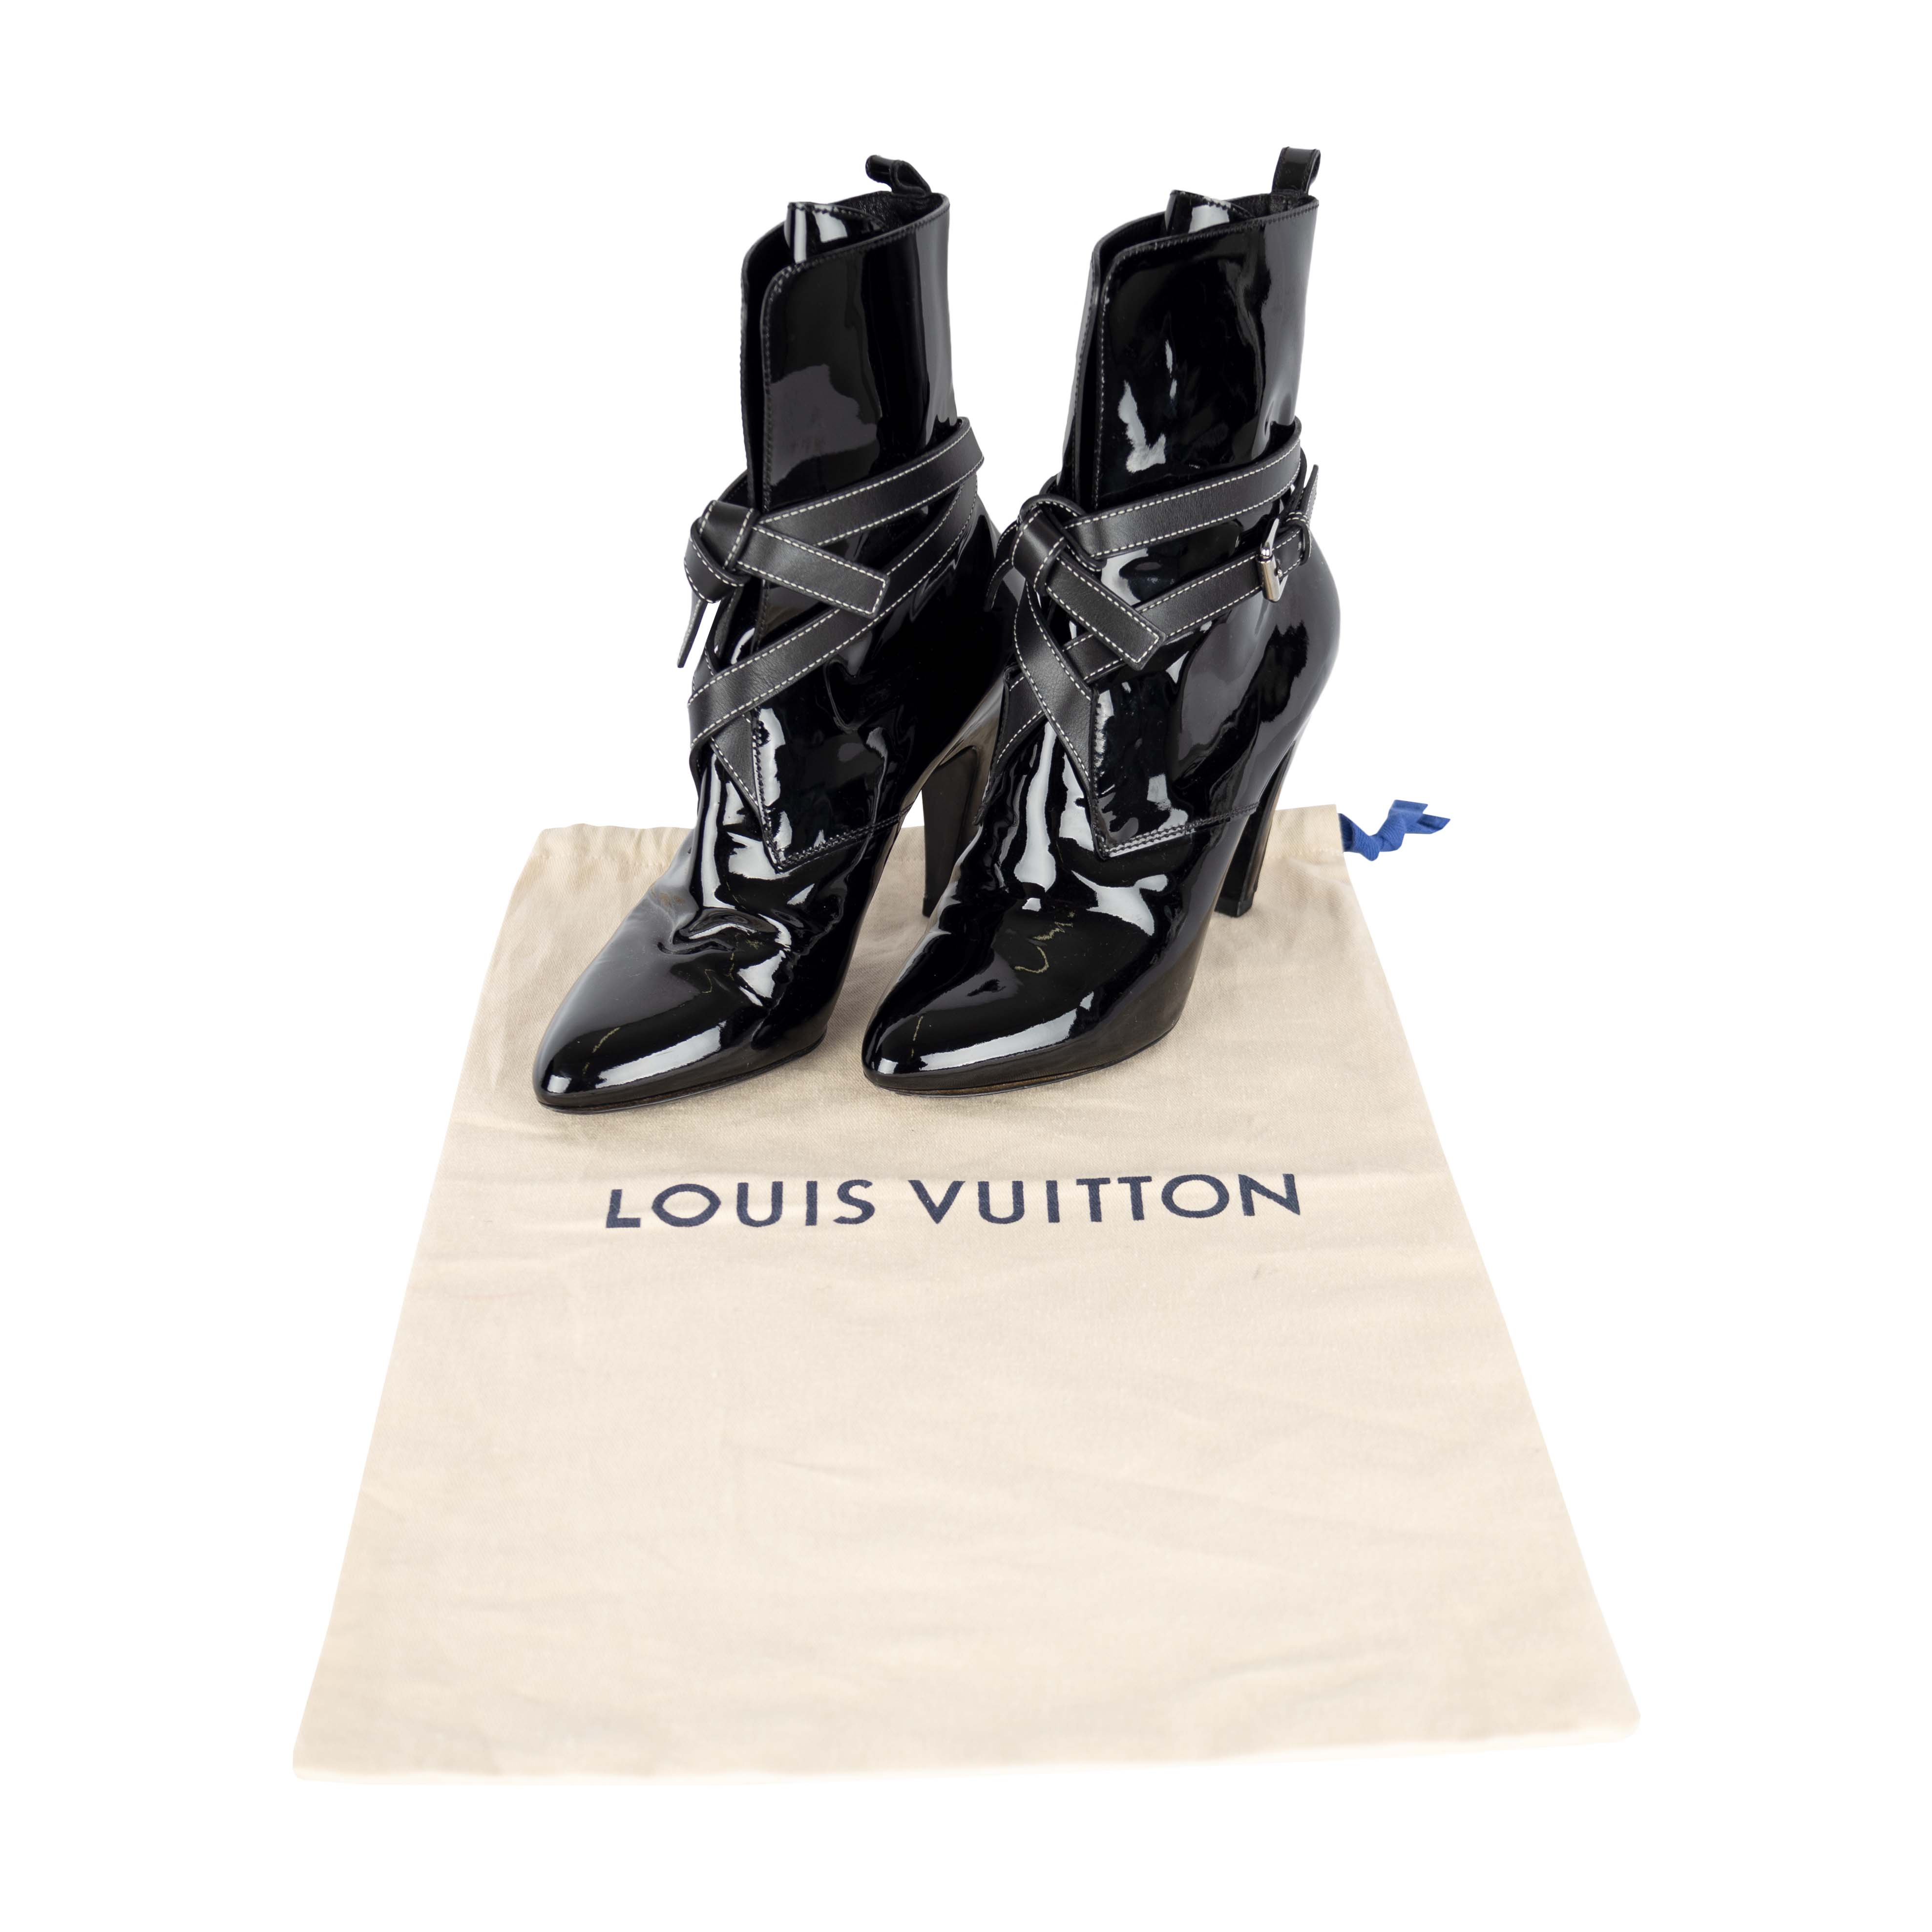 LOUIS VUITTON Sculpted Heel Sandal 37.5 - More Than You Can Imagine